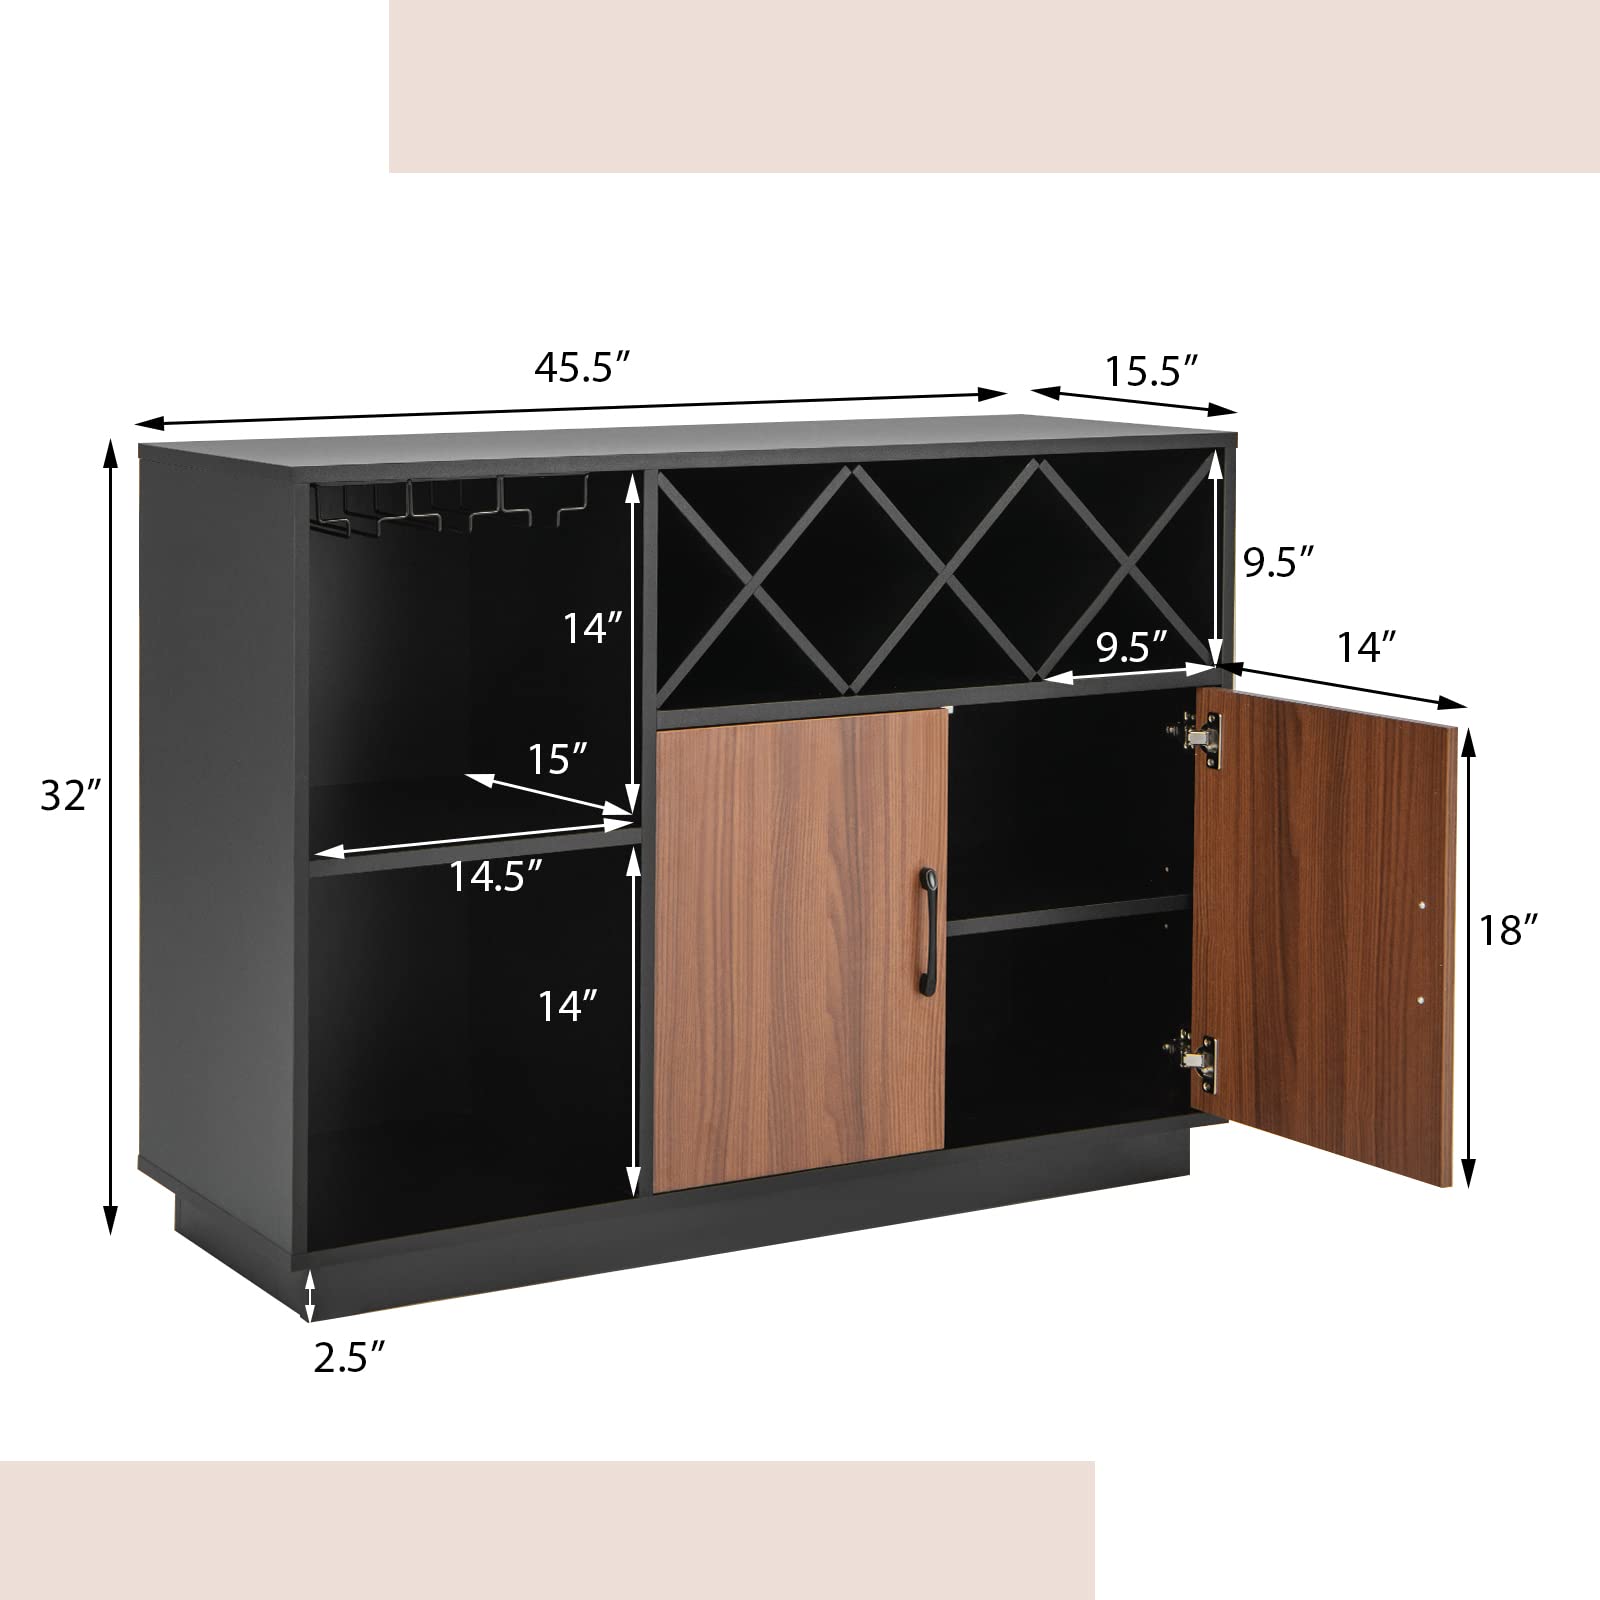 Giantex Buffet Sideboard, Wine Bar Base Cabinet 45”X15”x32”